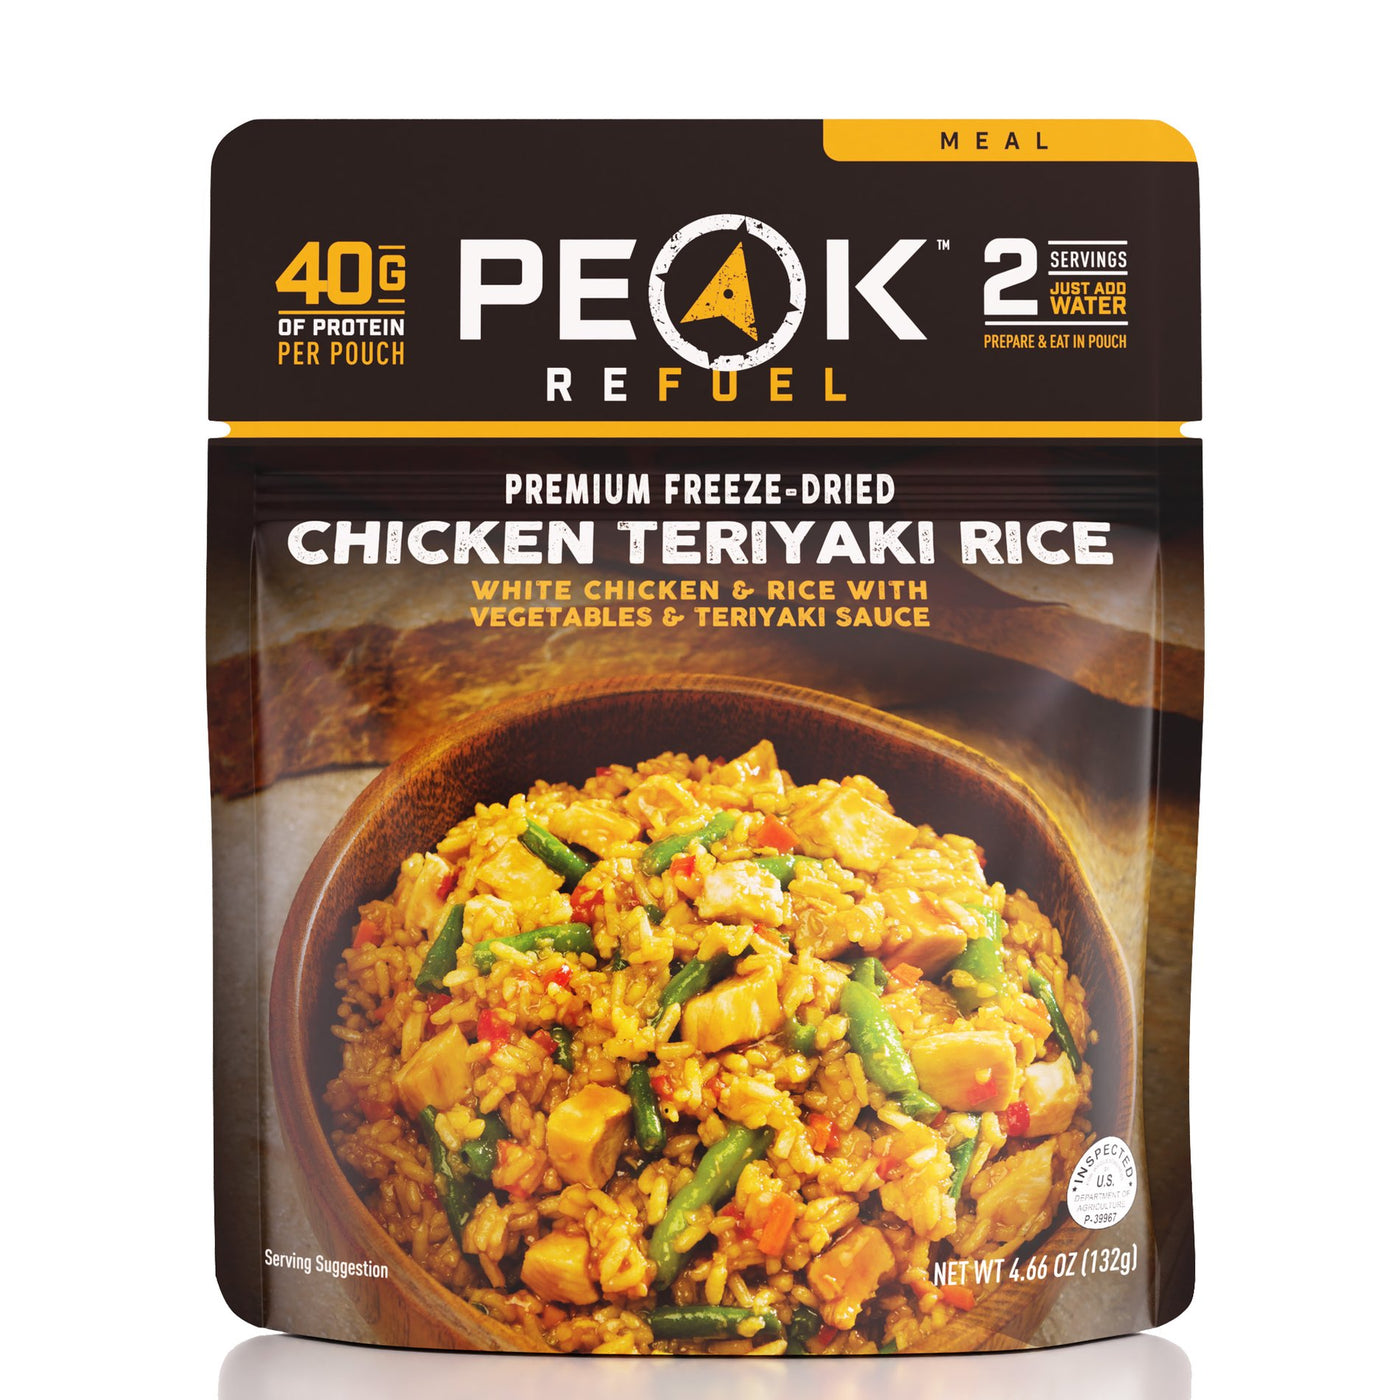 peak refuel chicken teriyaki rice meal